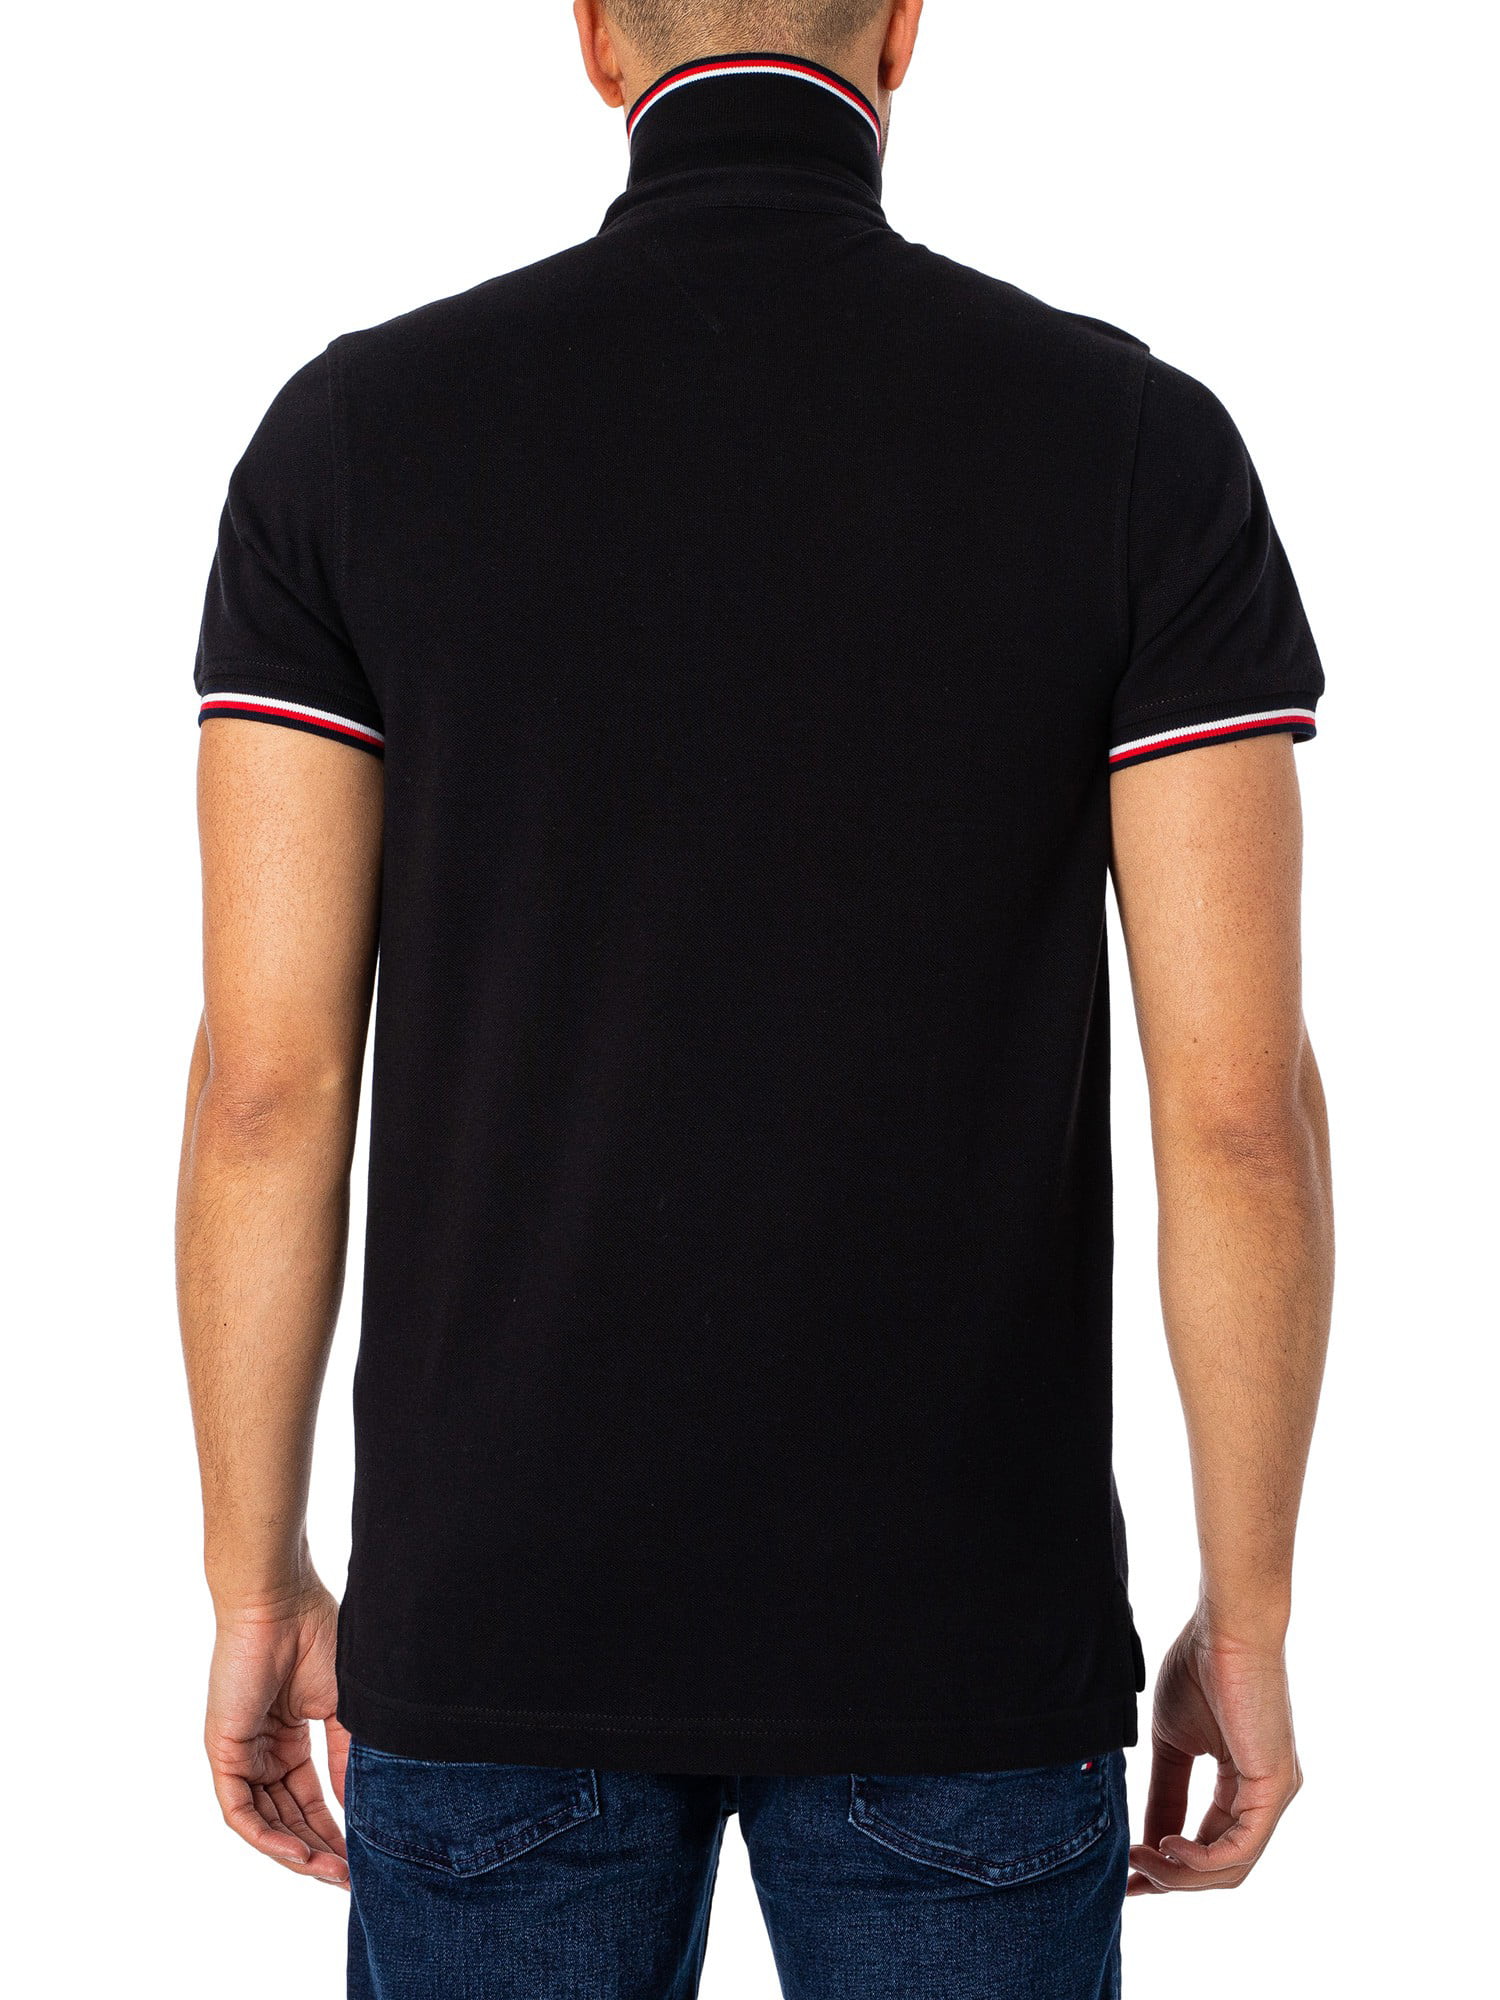 Tipped Hilfiger Slim Core Shirt, Black Polo Tommy